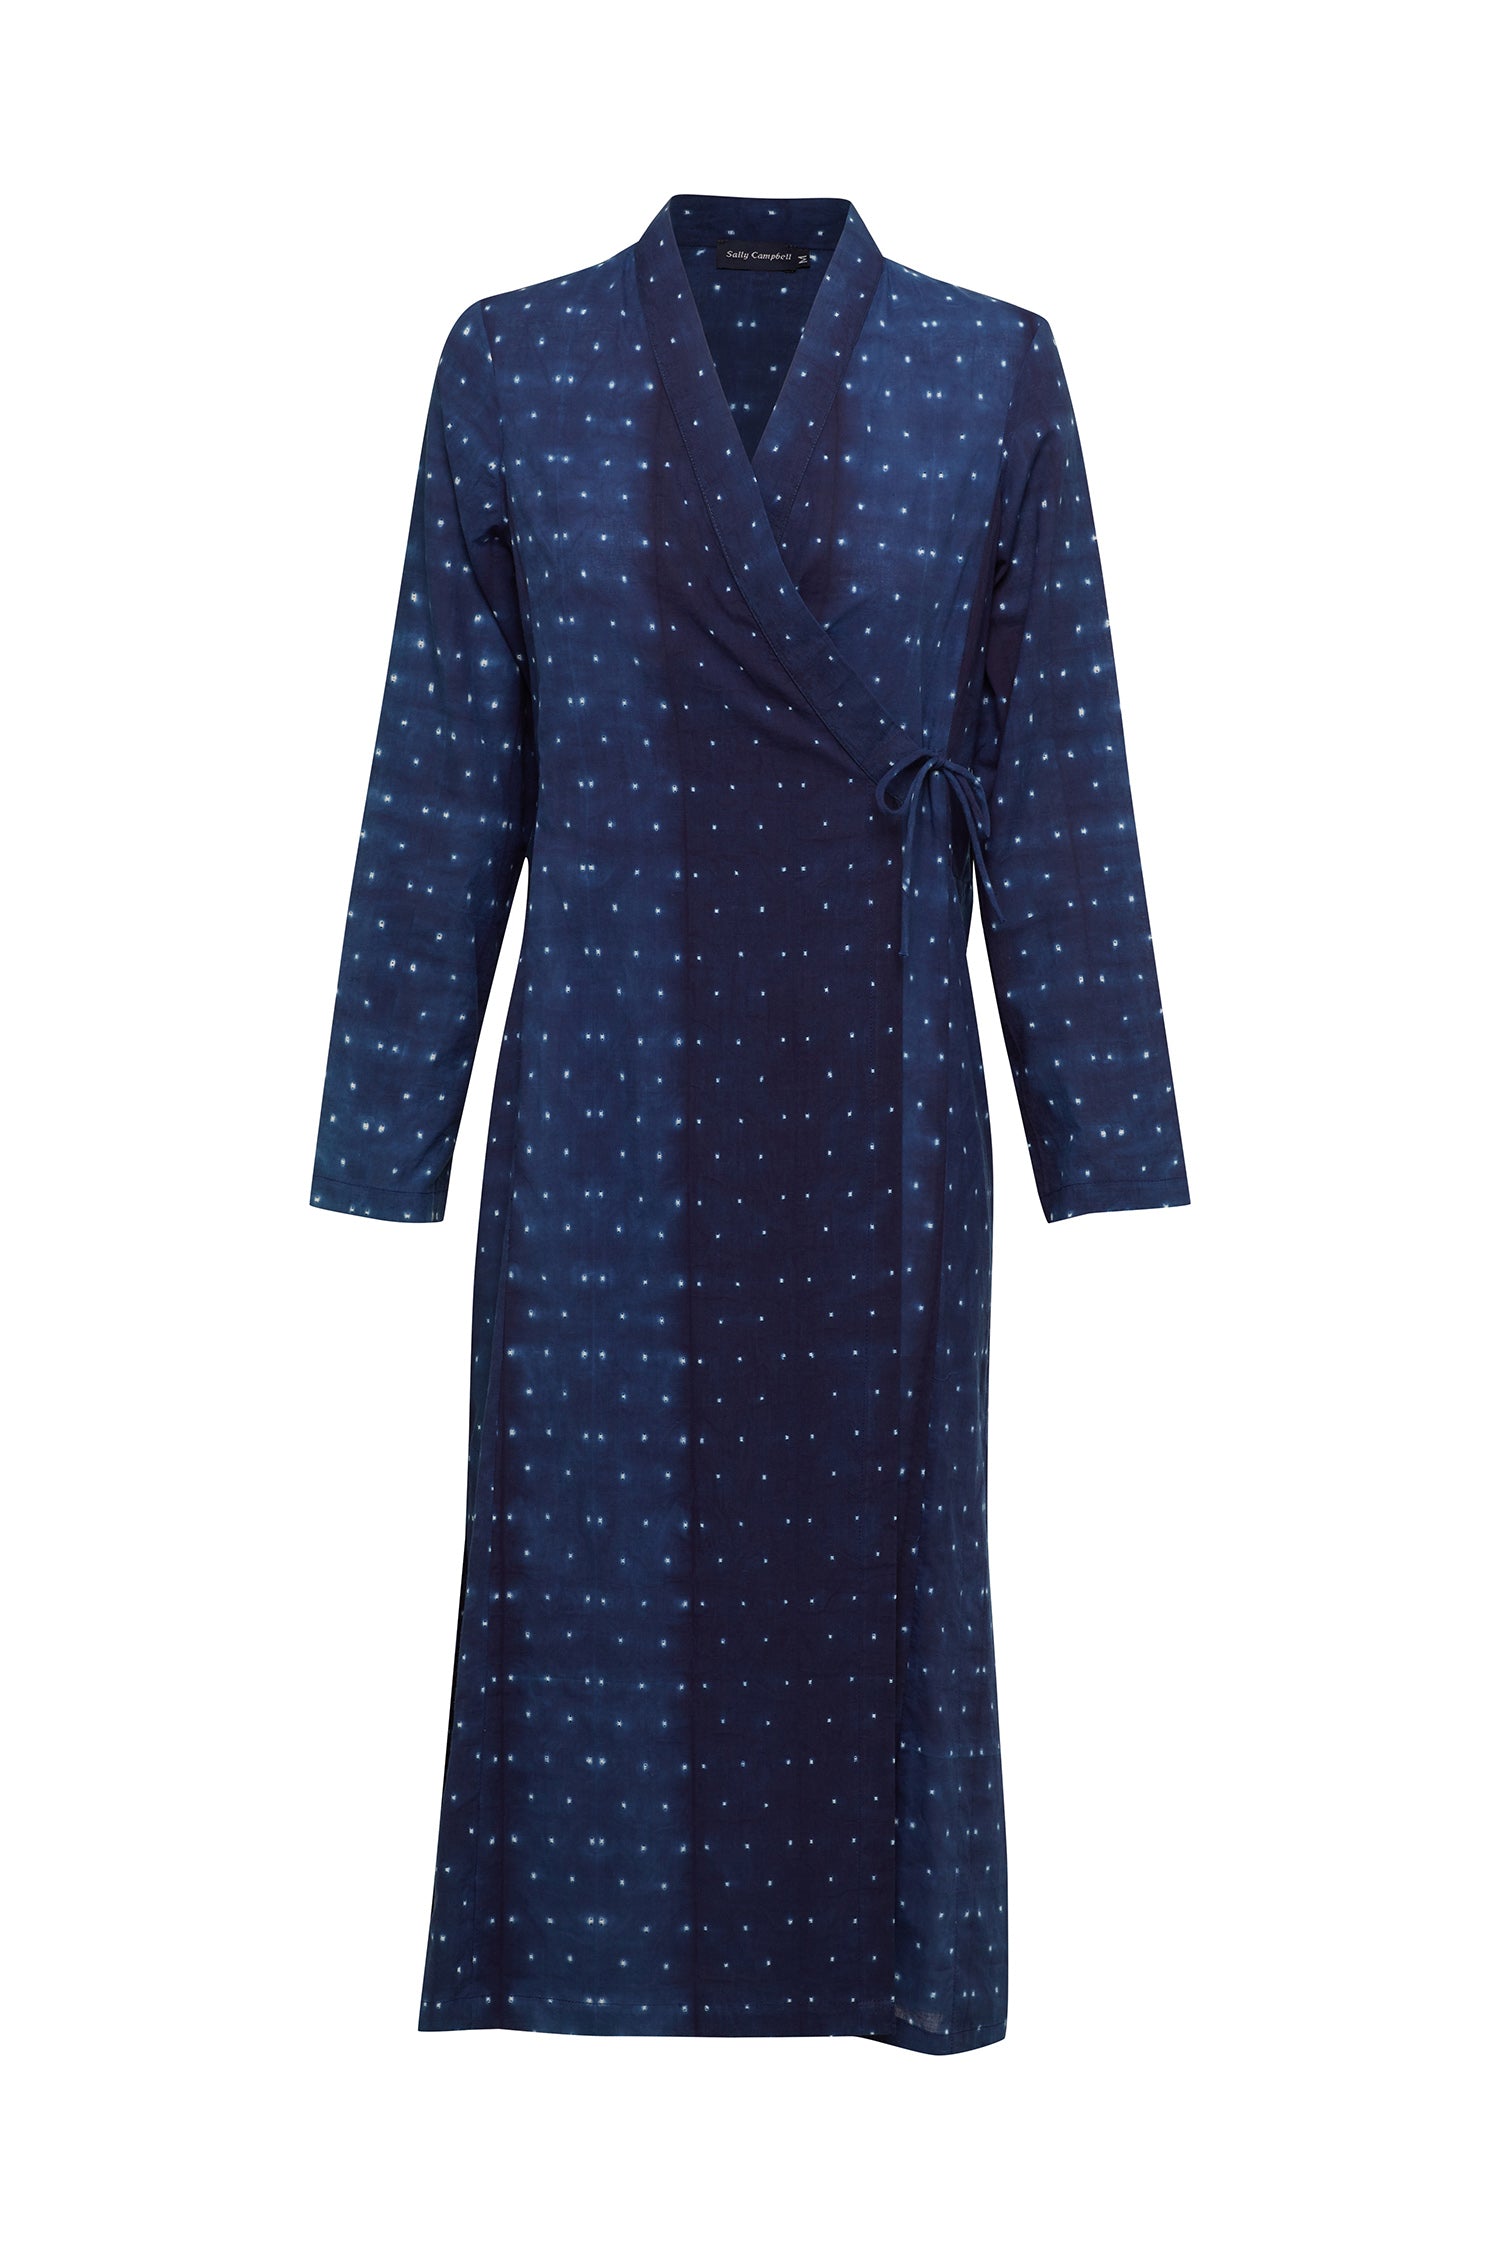 Starry Night Shibori Coat